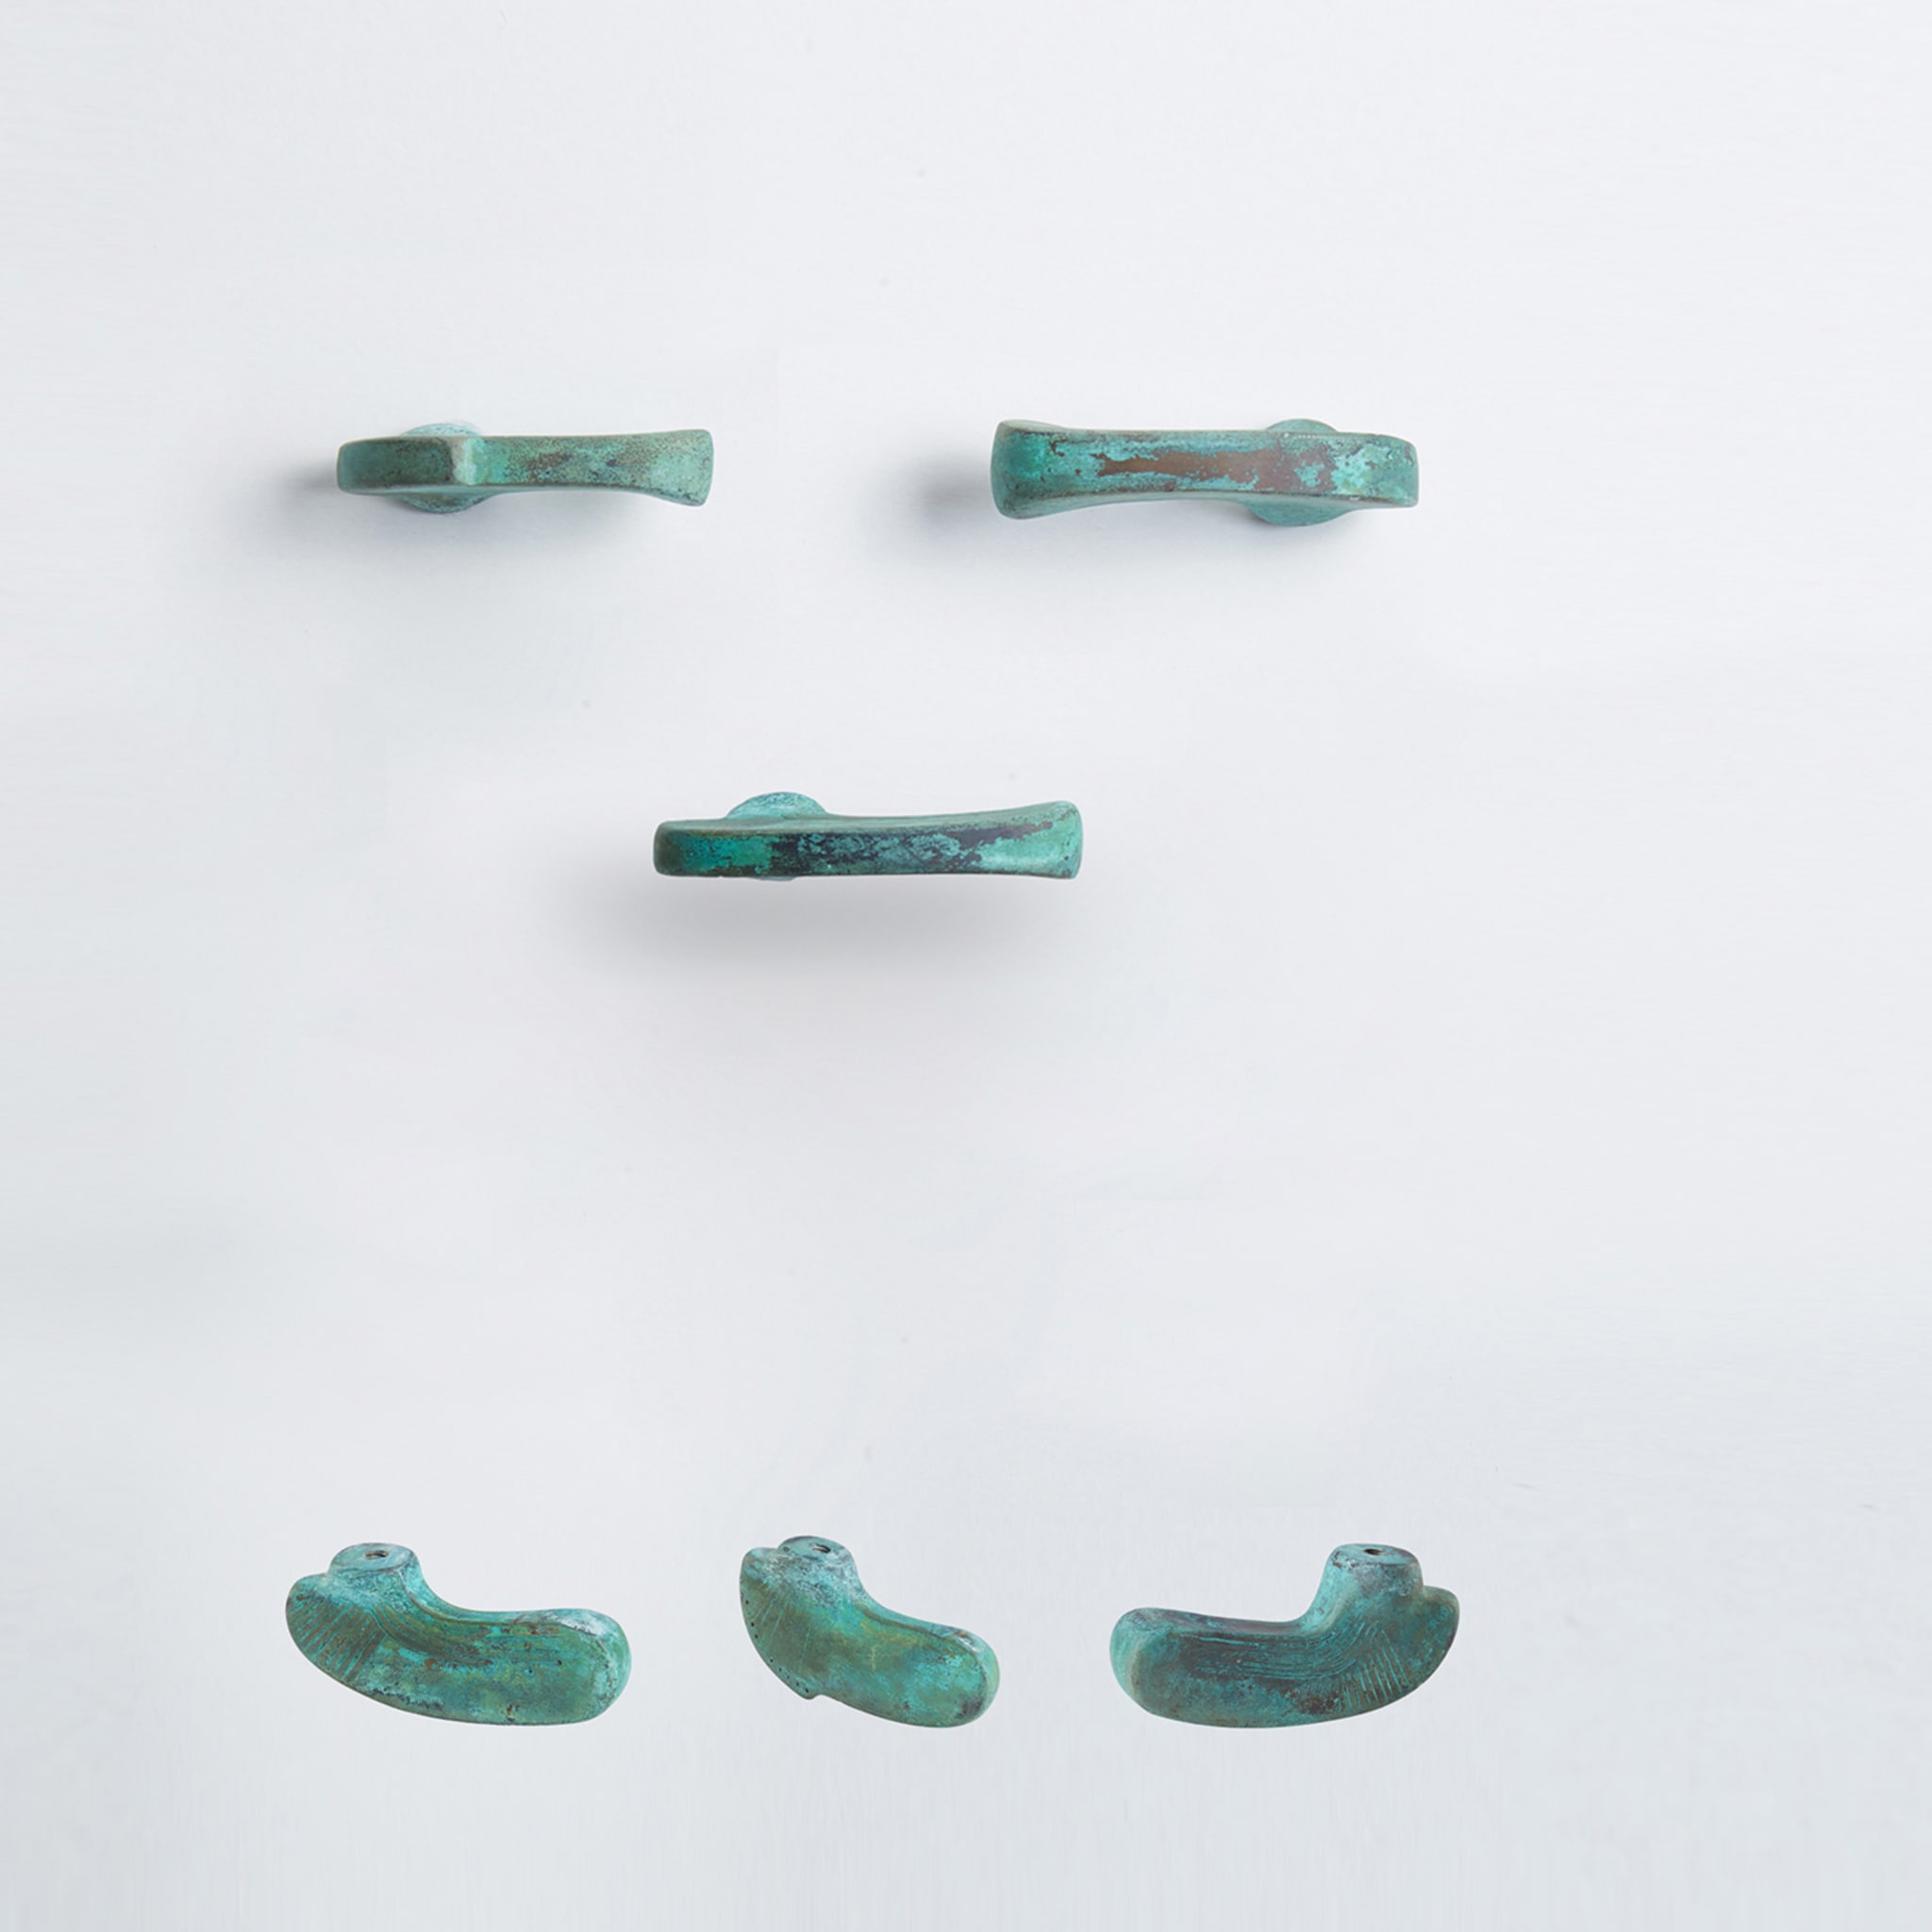 Inca Set of 4 Green Door Knobs #2 by Nicole Valenti - Alternative view 1